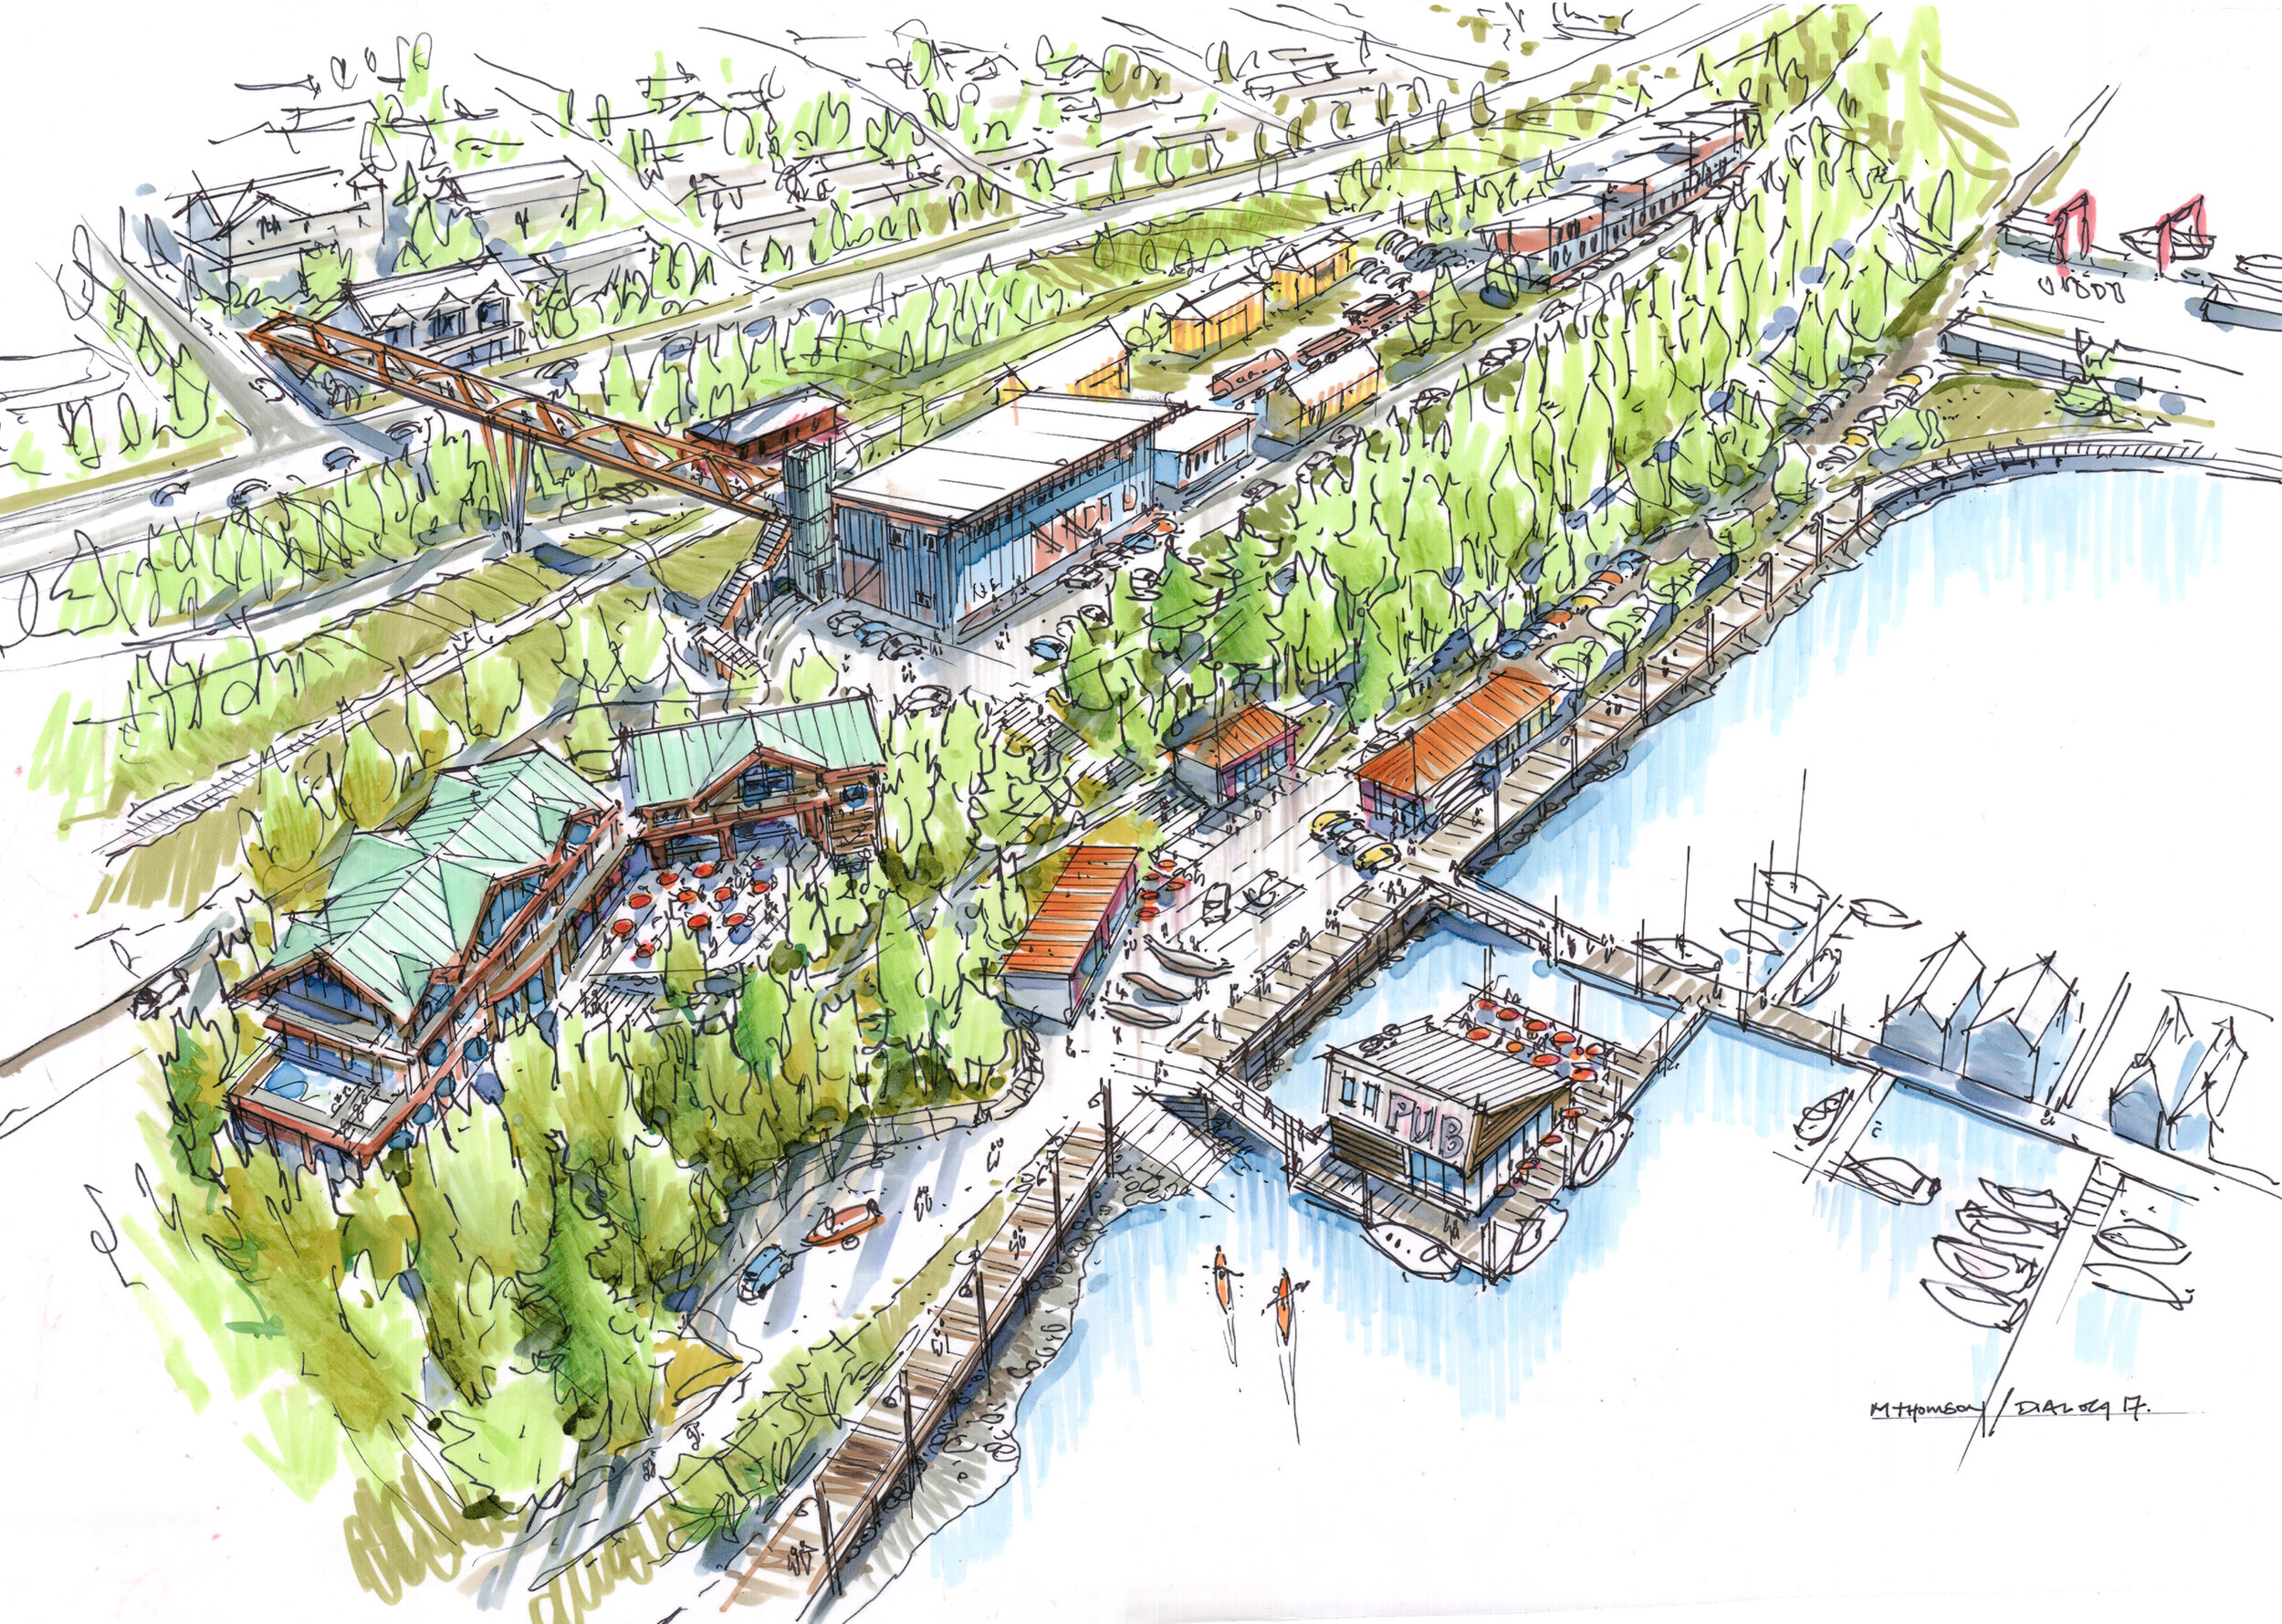 Ladysmith Waterfront Vision and Masterplan, while at DIALOG